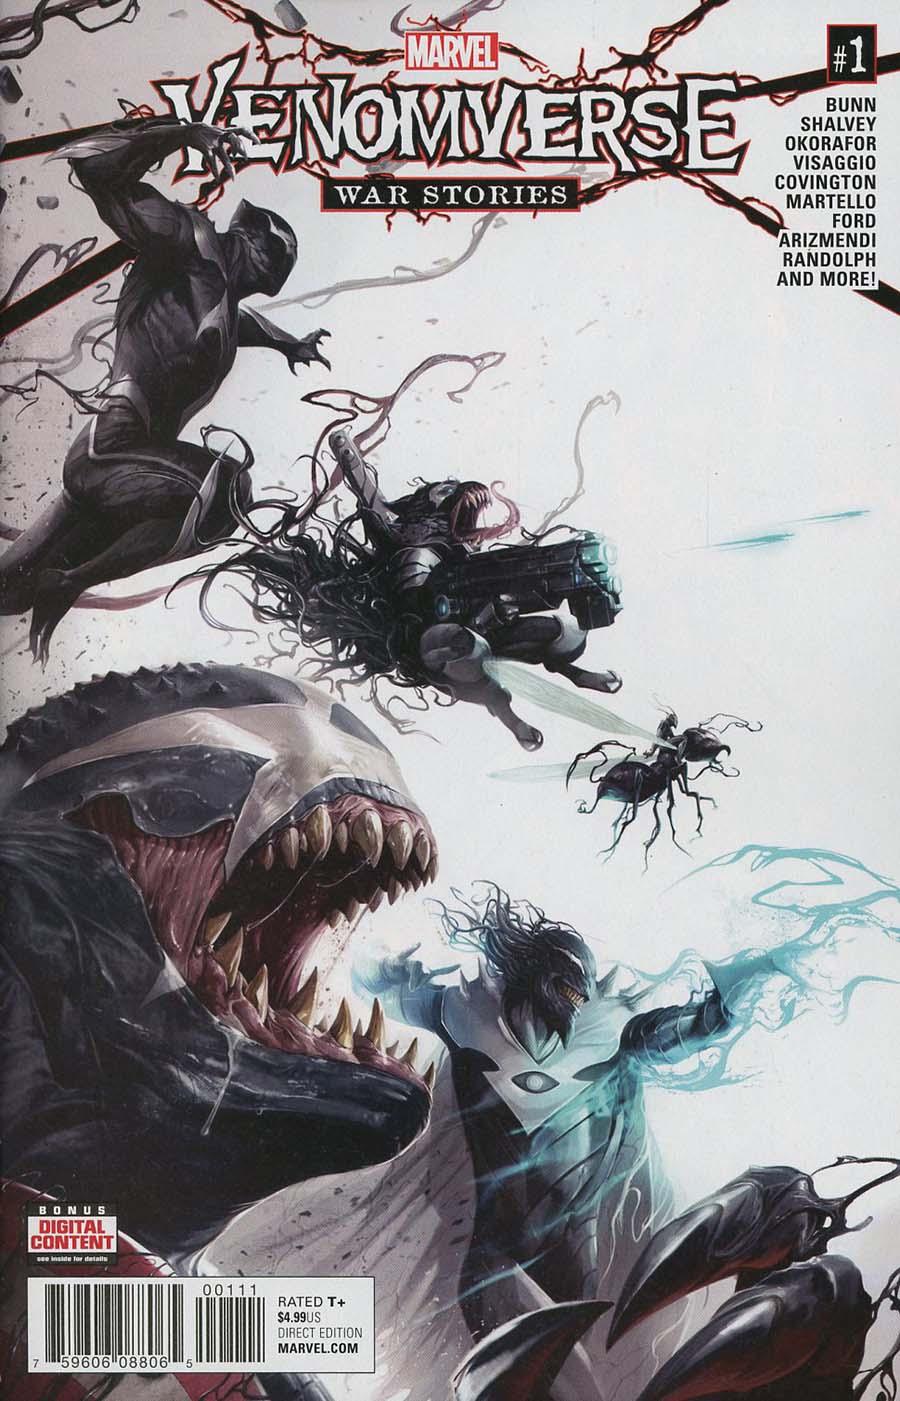 Venomverse War Stories Vol. 1 #1